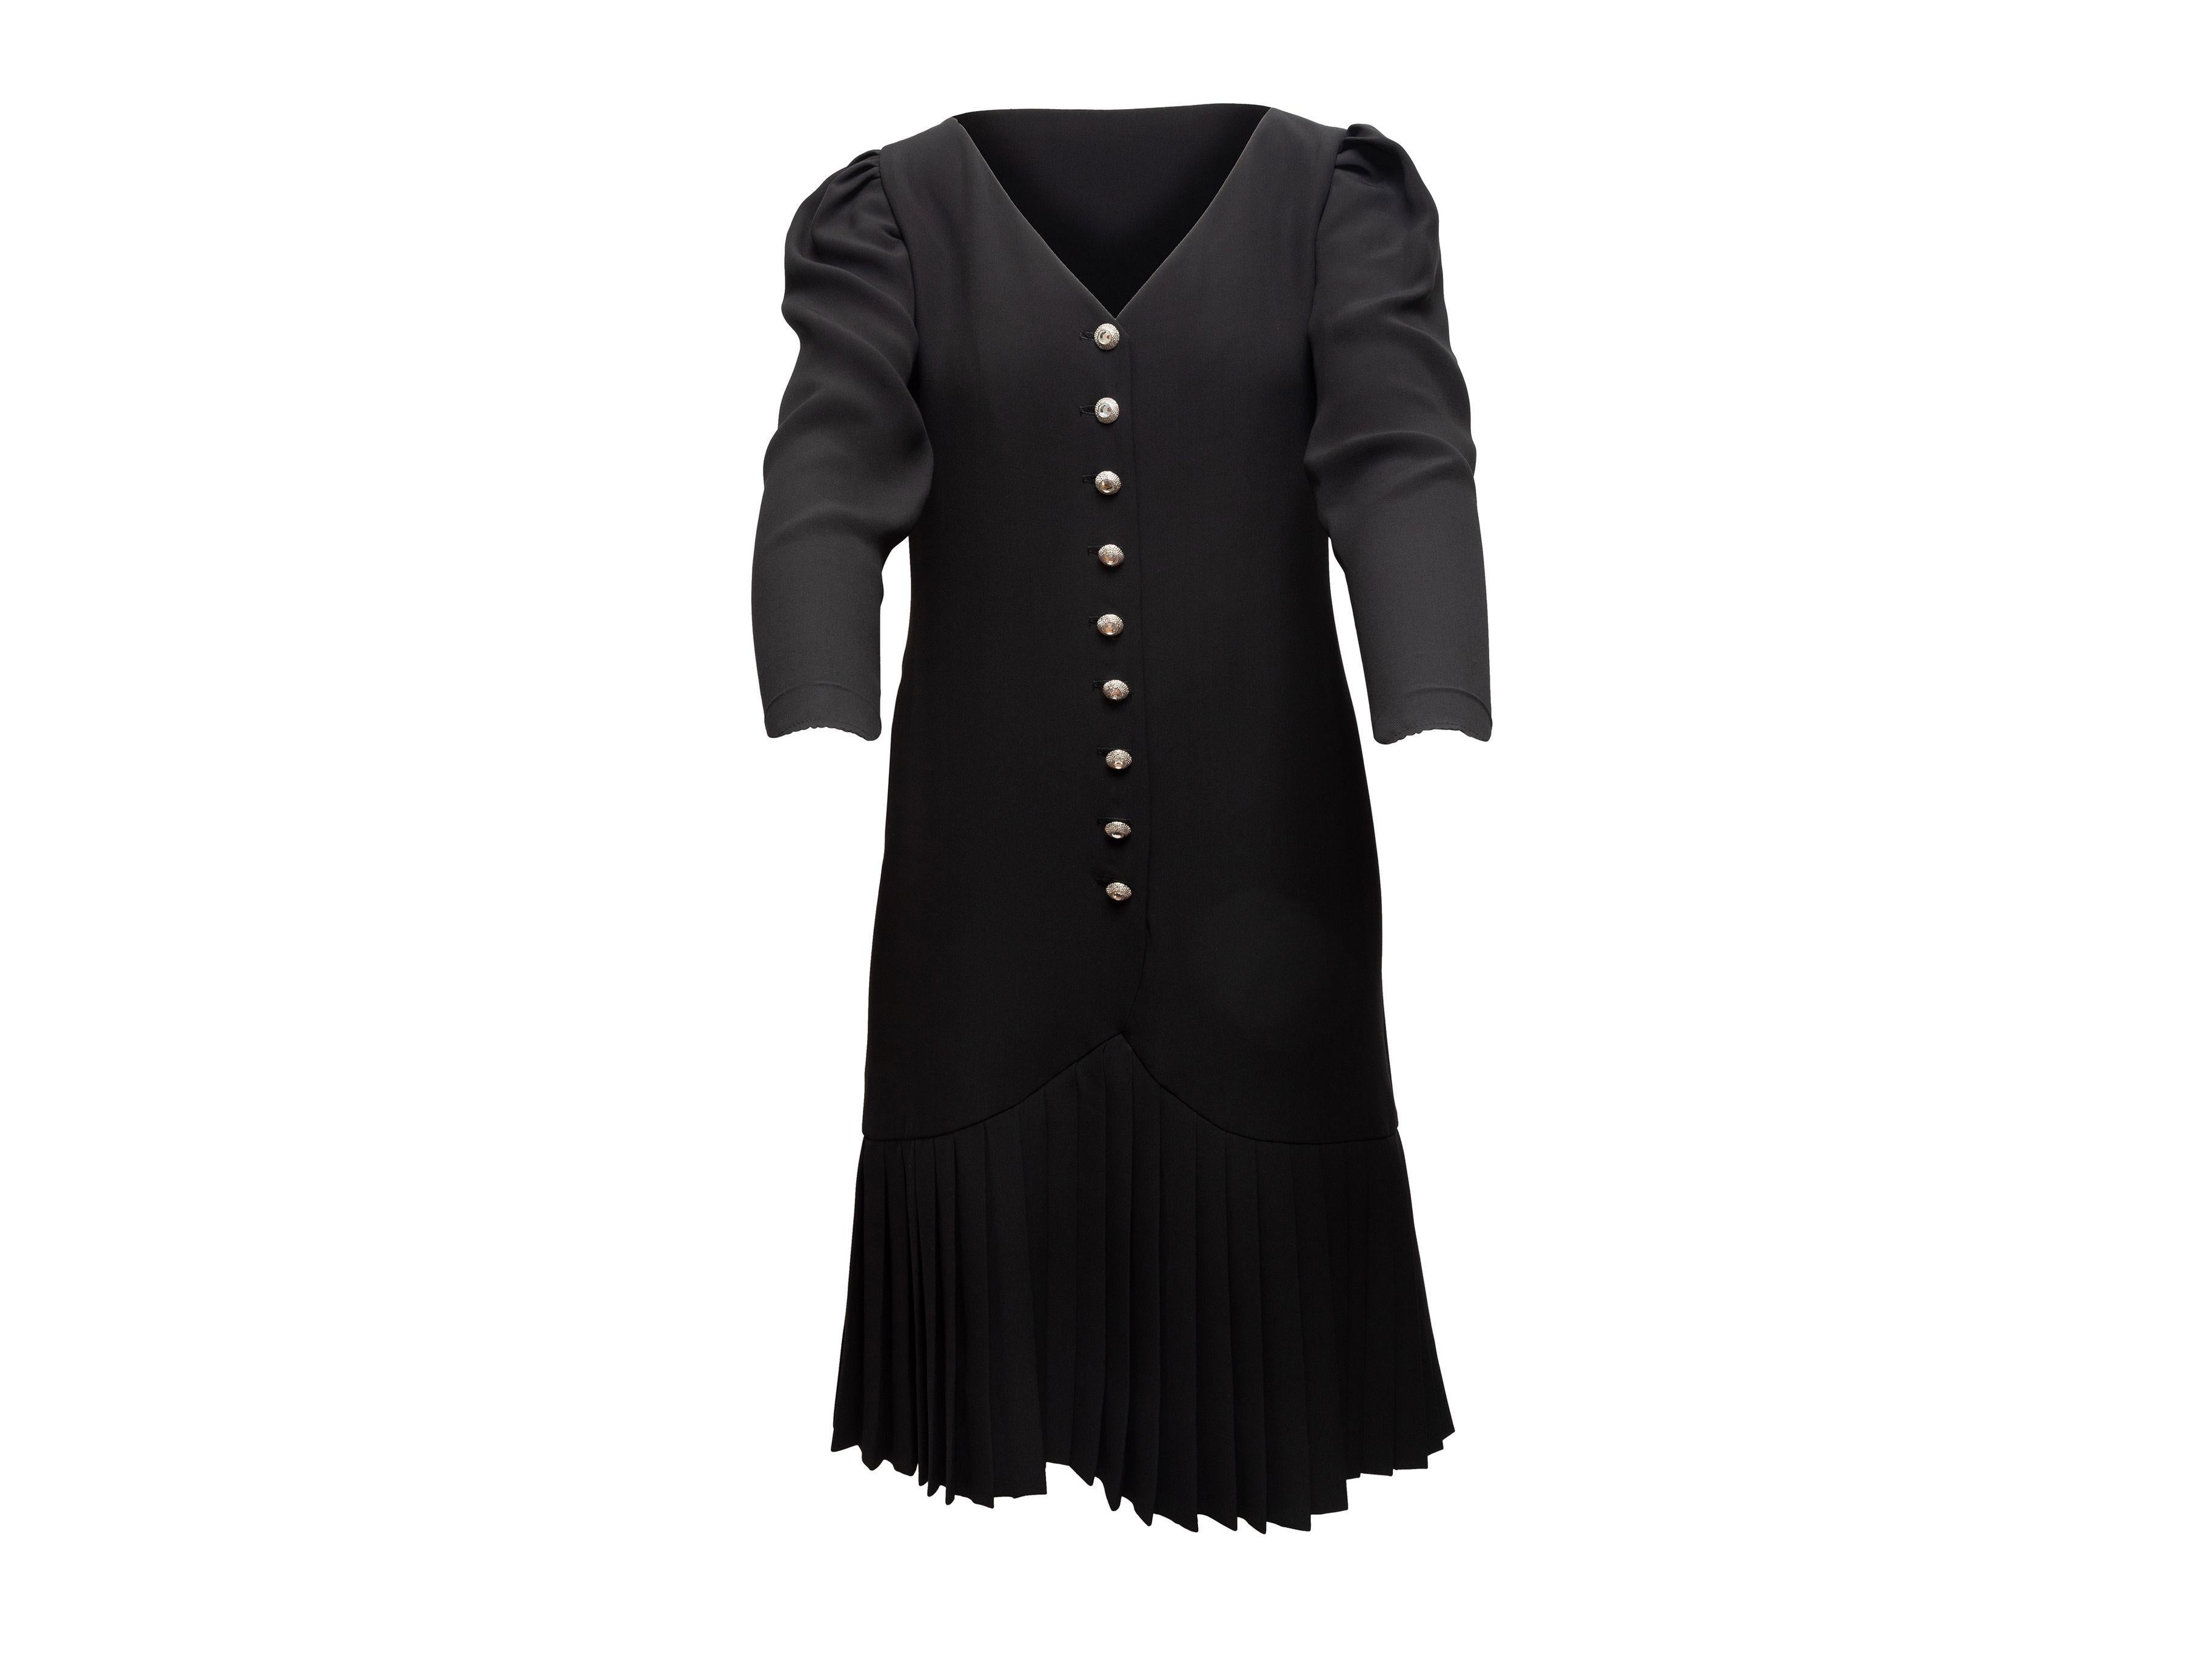 Adele Simpson Black Long Sleeve Button-Up Dress 2